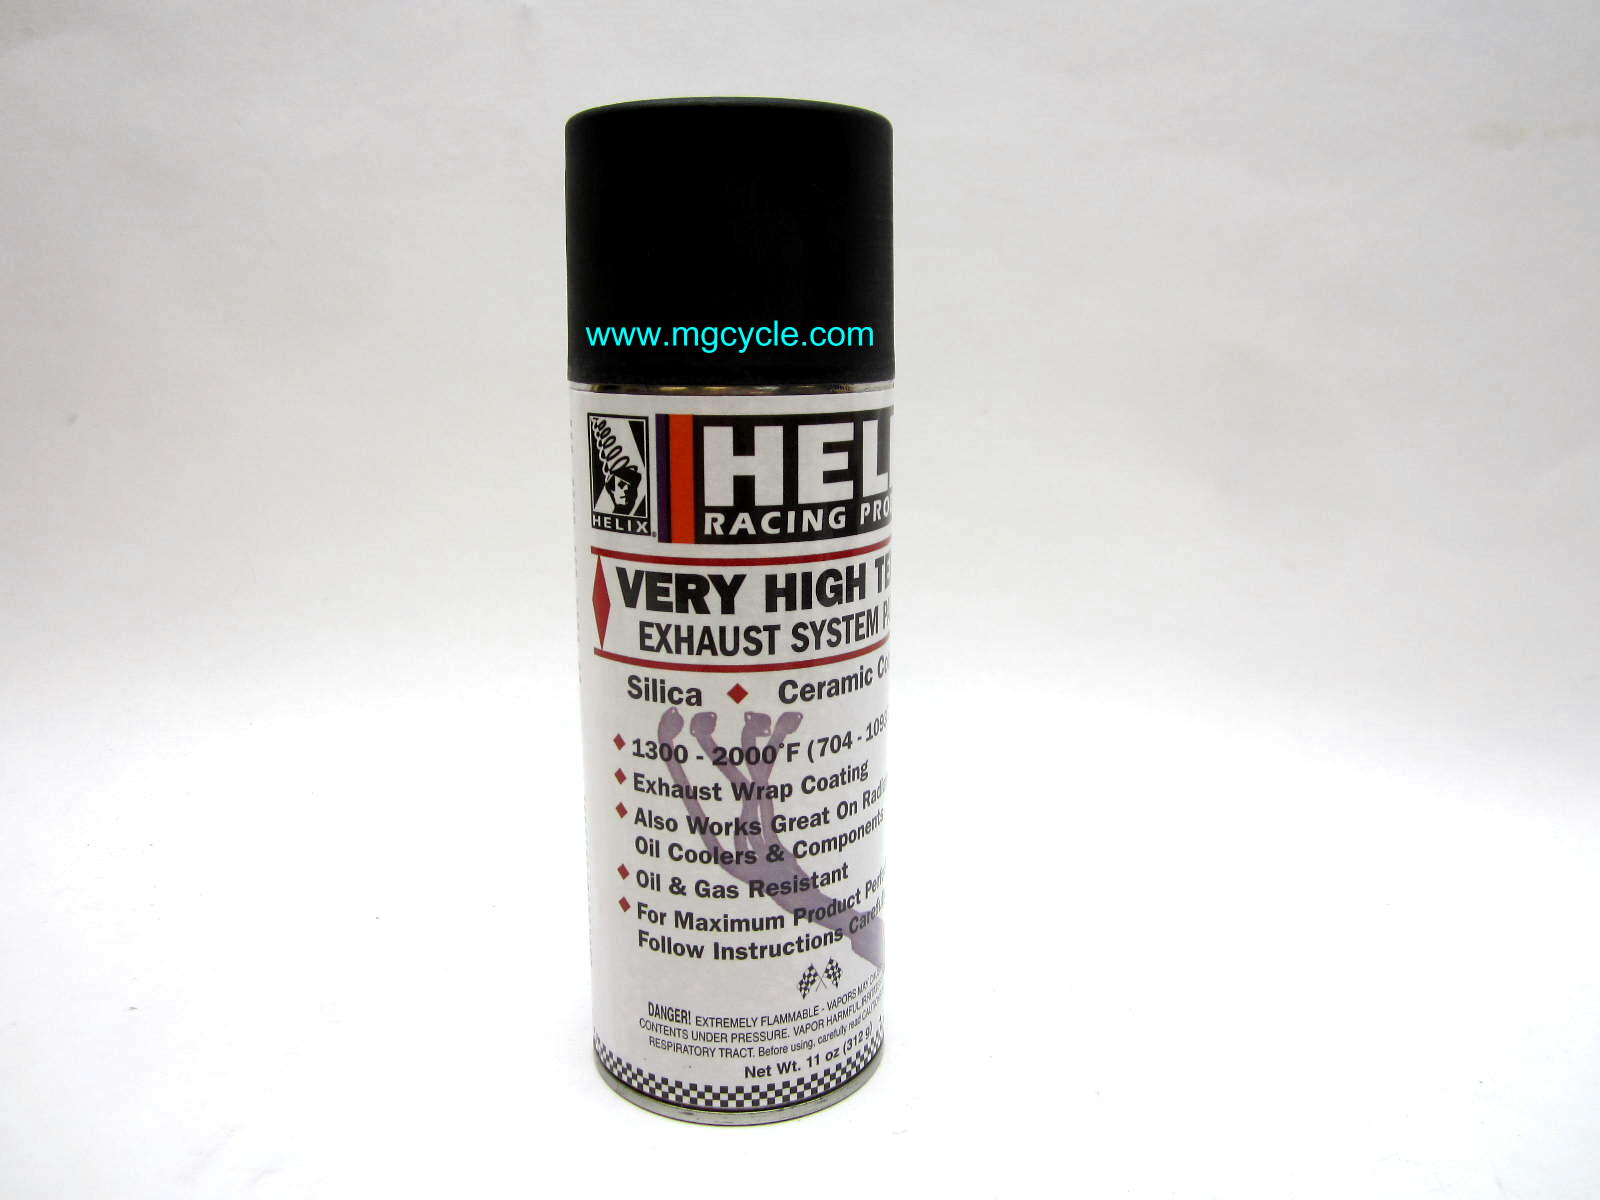 Helix Racing Products Hi Temp Header Paint, flat black 11oz